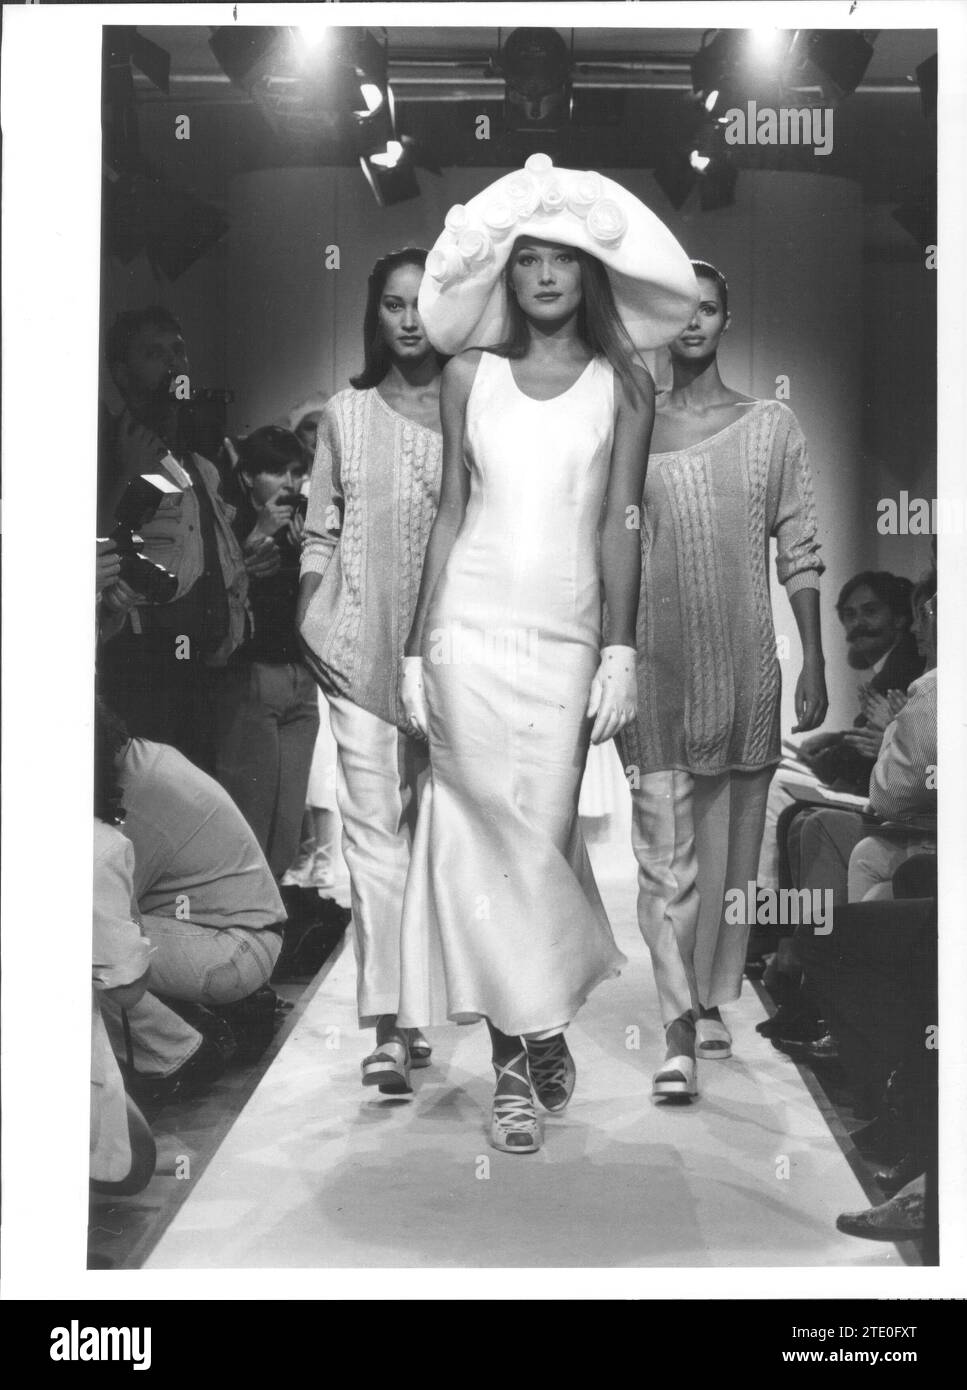 09/21/1992. Carla Bruni walks for Loewe on the Cibeles catwalk. Credit: Album / Archivo ABC / Jaime García Stock Photo